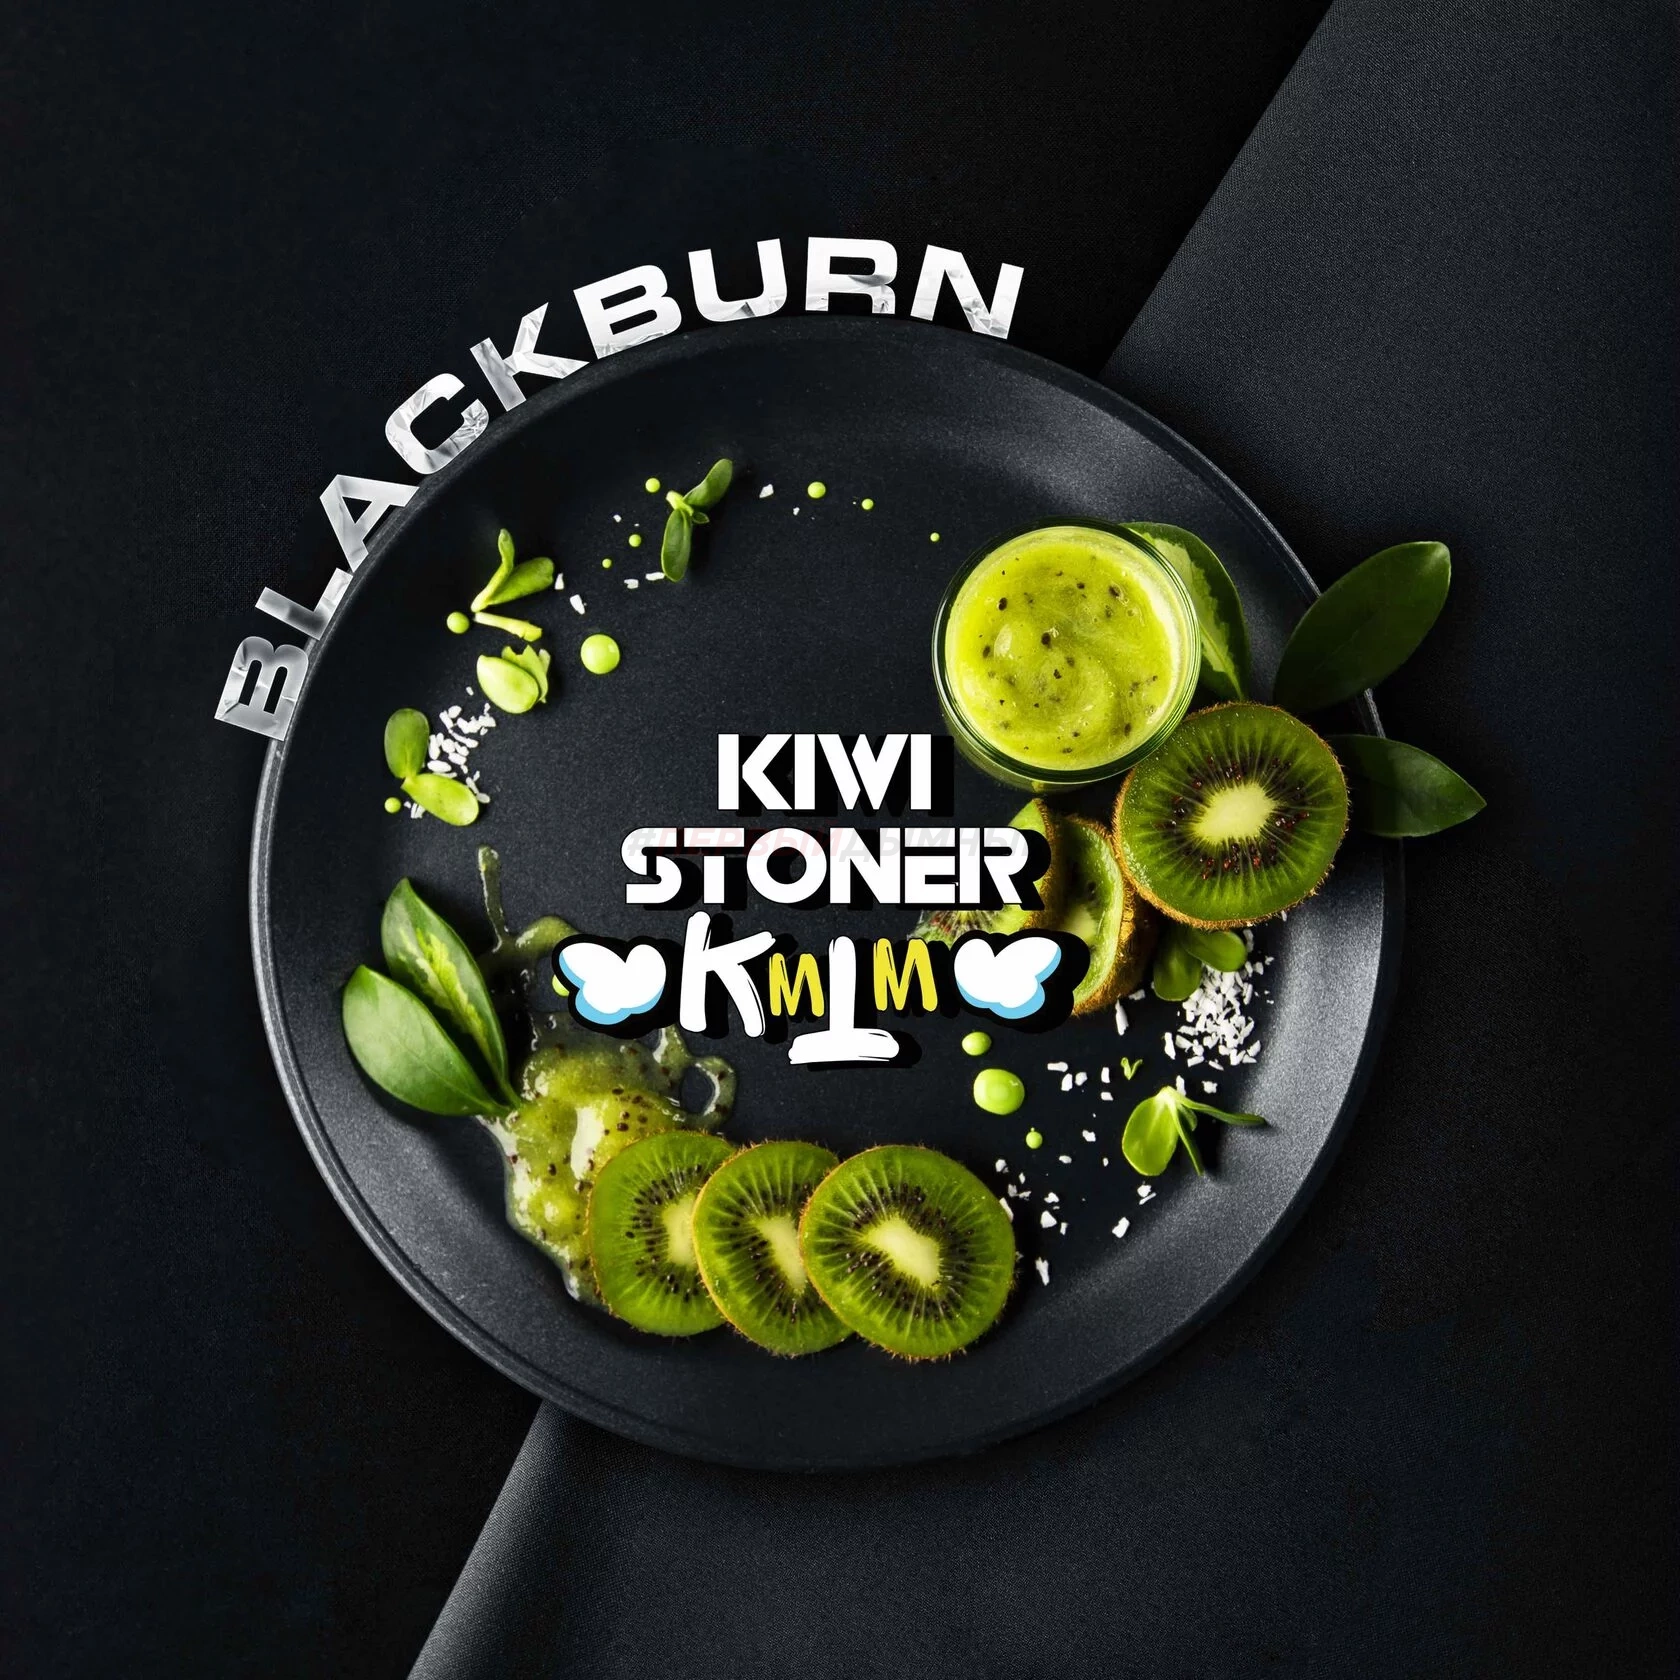 (МТ) BlackBurn 100гр Kiwi Stoner - Смузи из киви